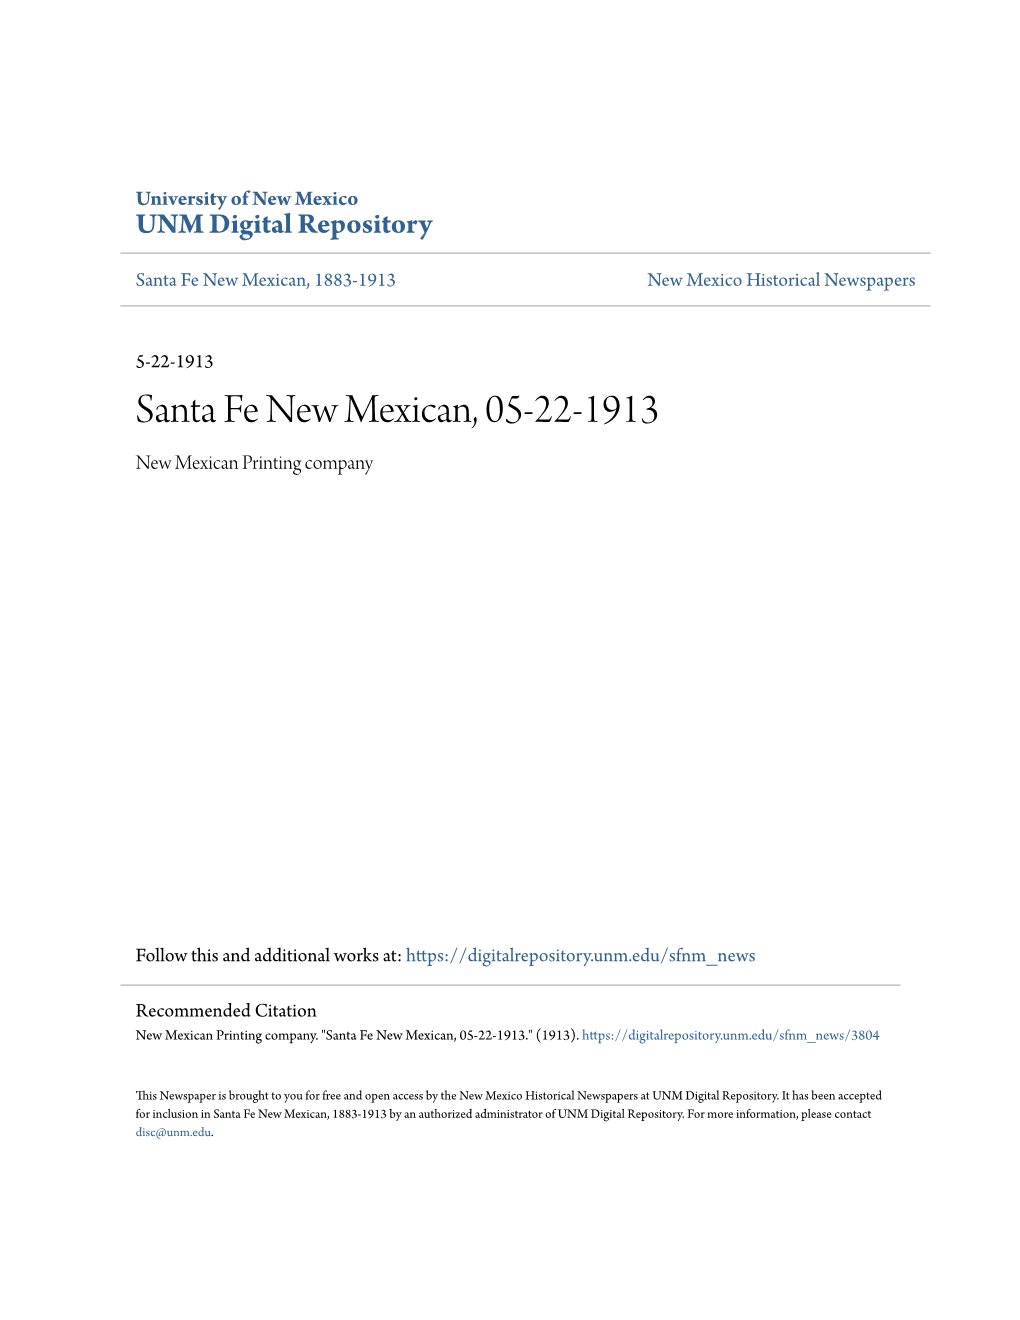 Santa Fe New Mexican, 05-22-1913 New Mexican Printing Company